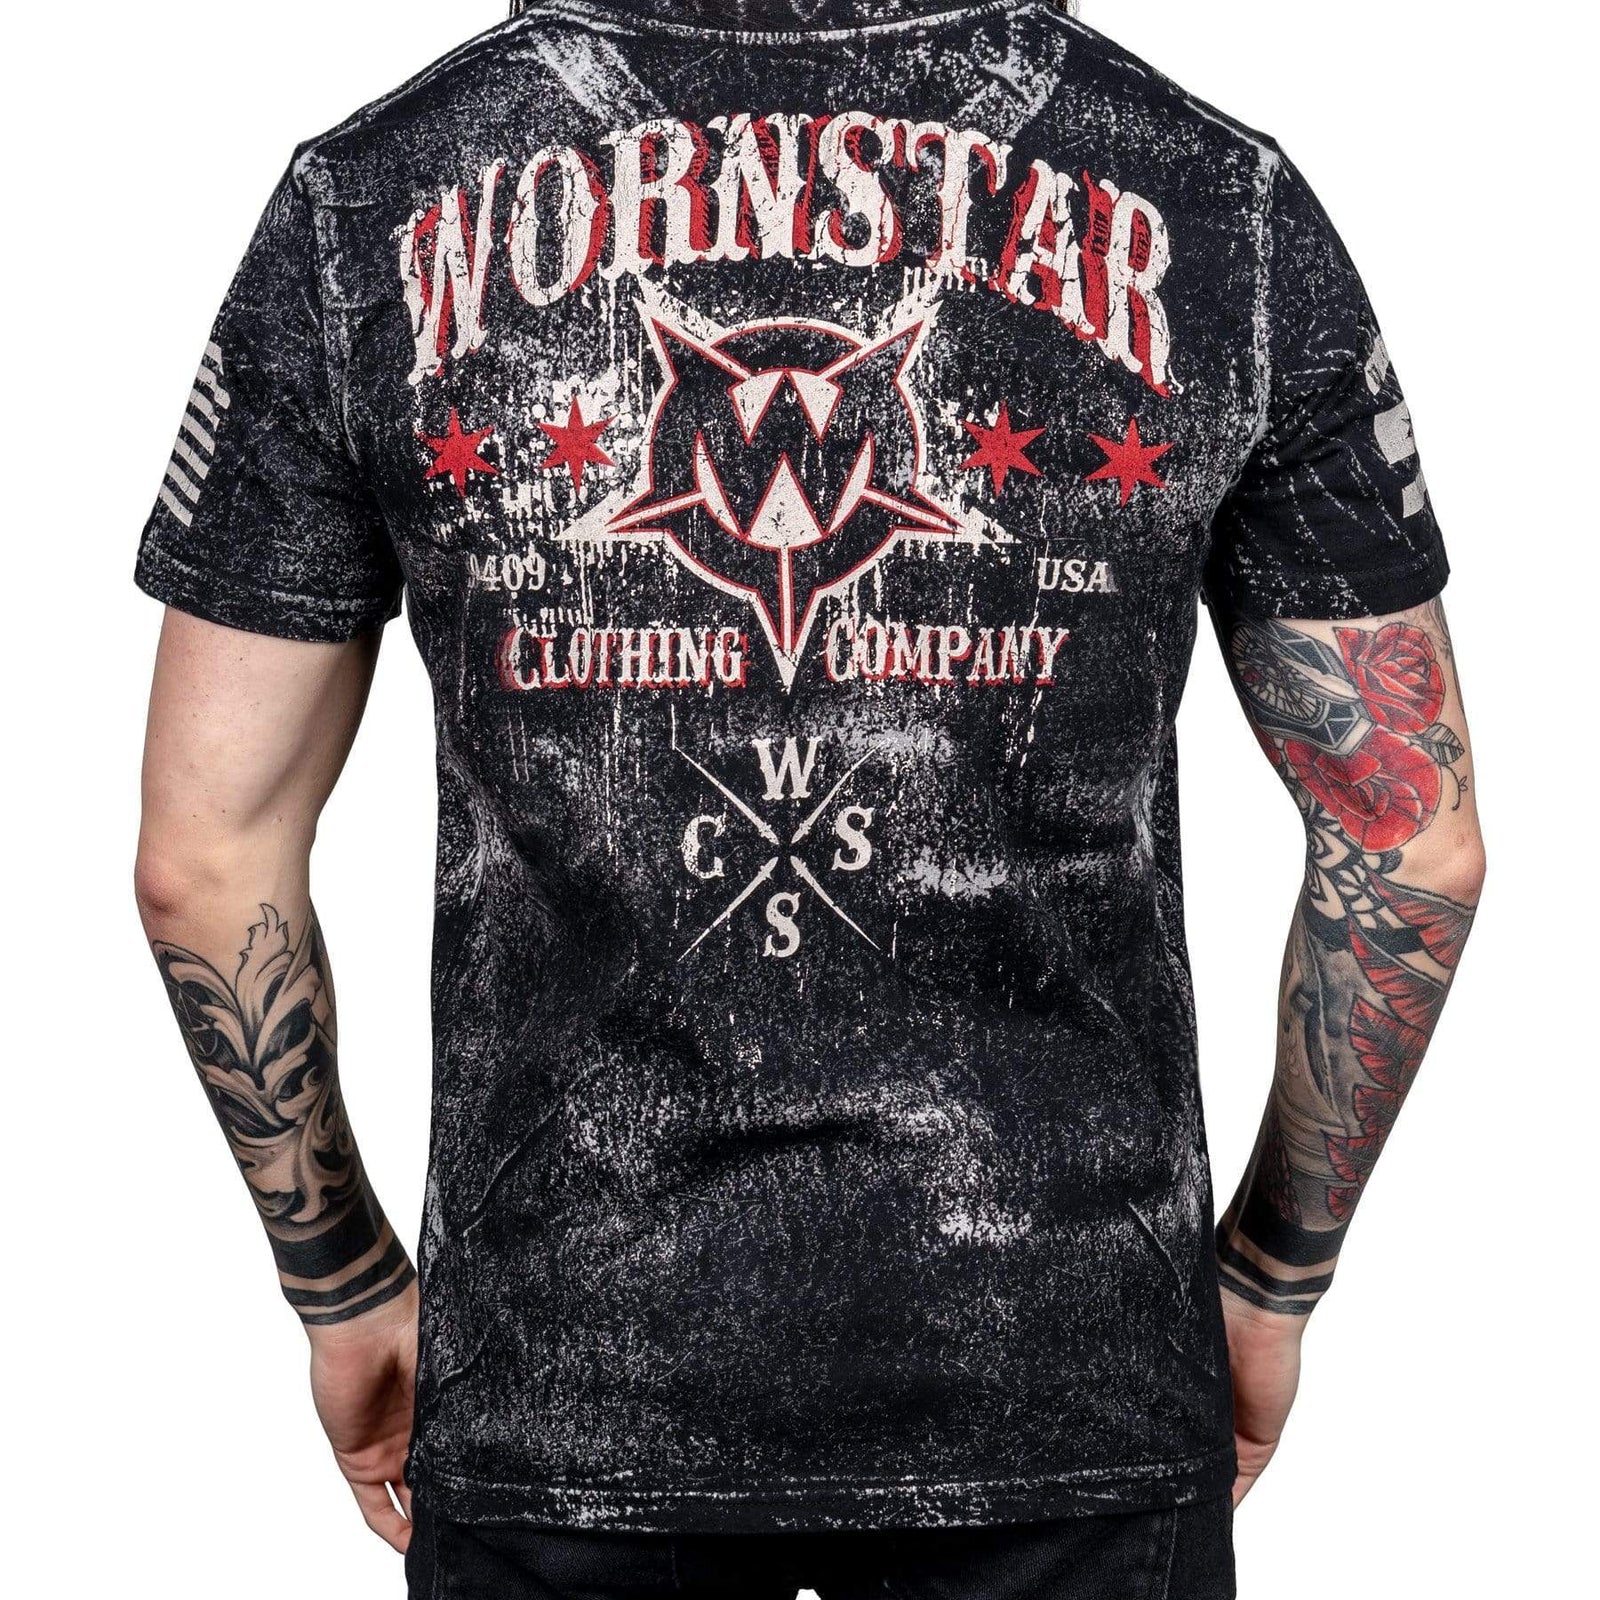 Wornstar Clothing | Authentic Rock Clothing